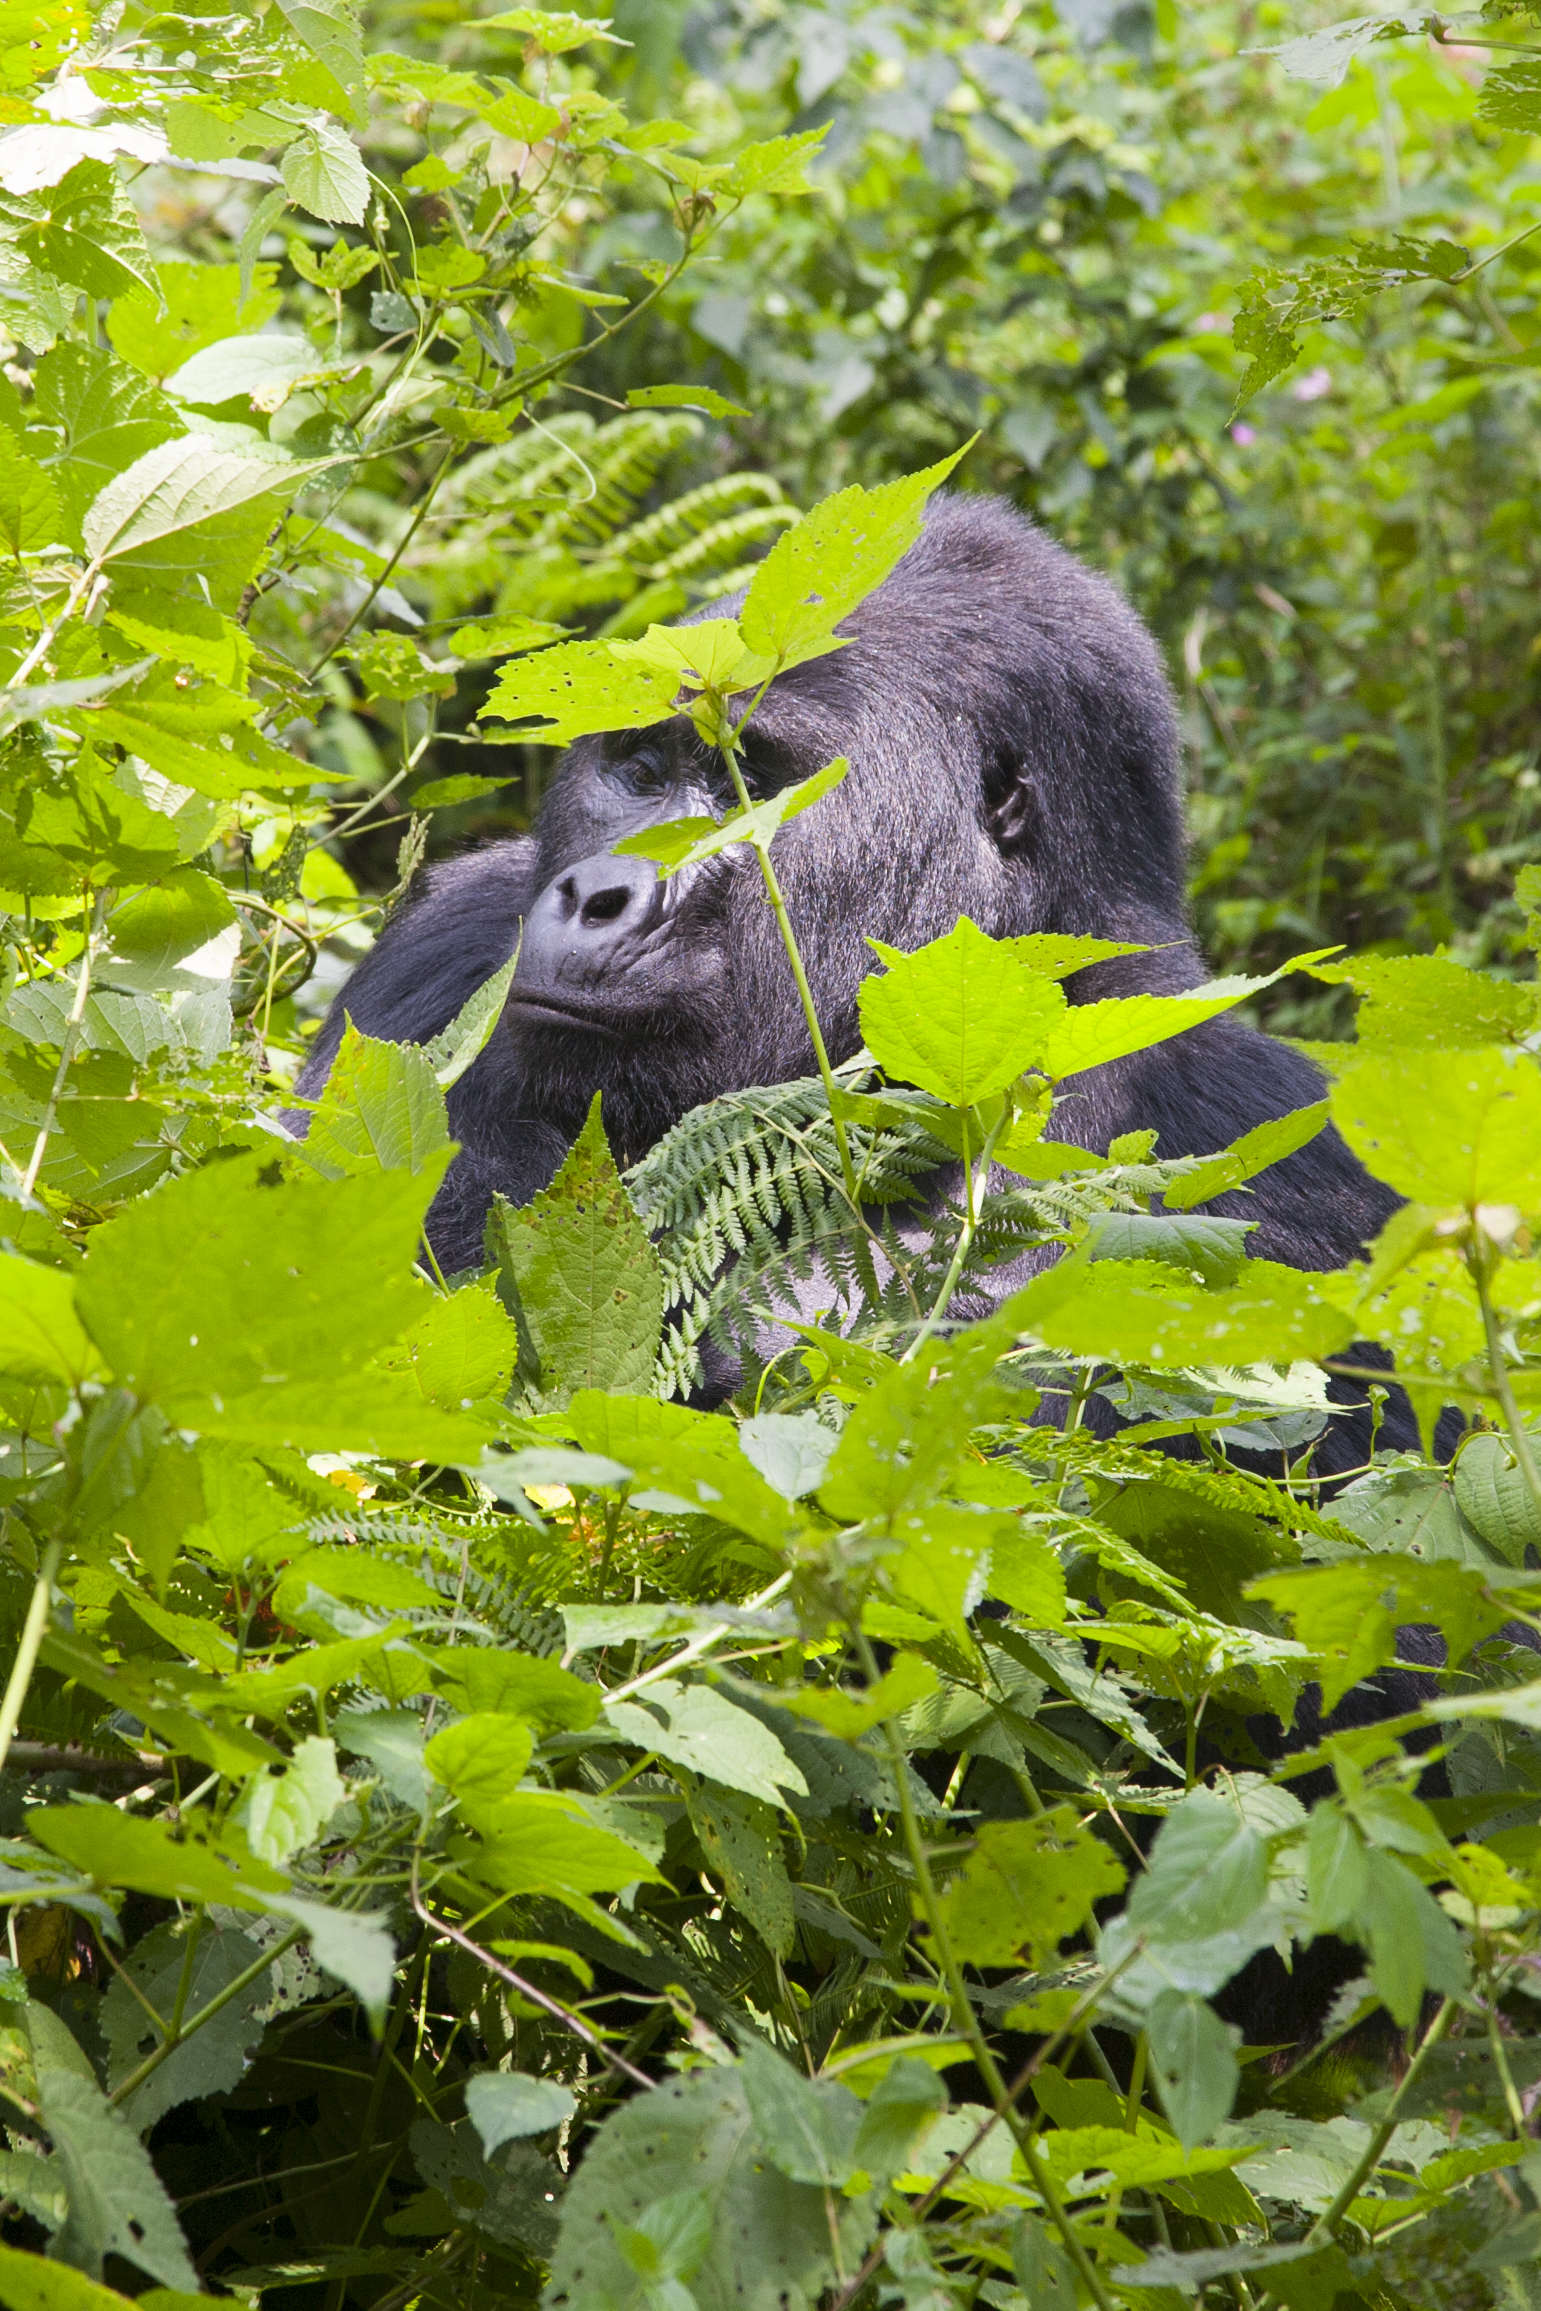  Berggorilla   Gorilla beringei beringei    Uganda    Bwindi NP    2012  